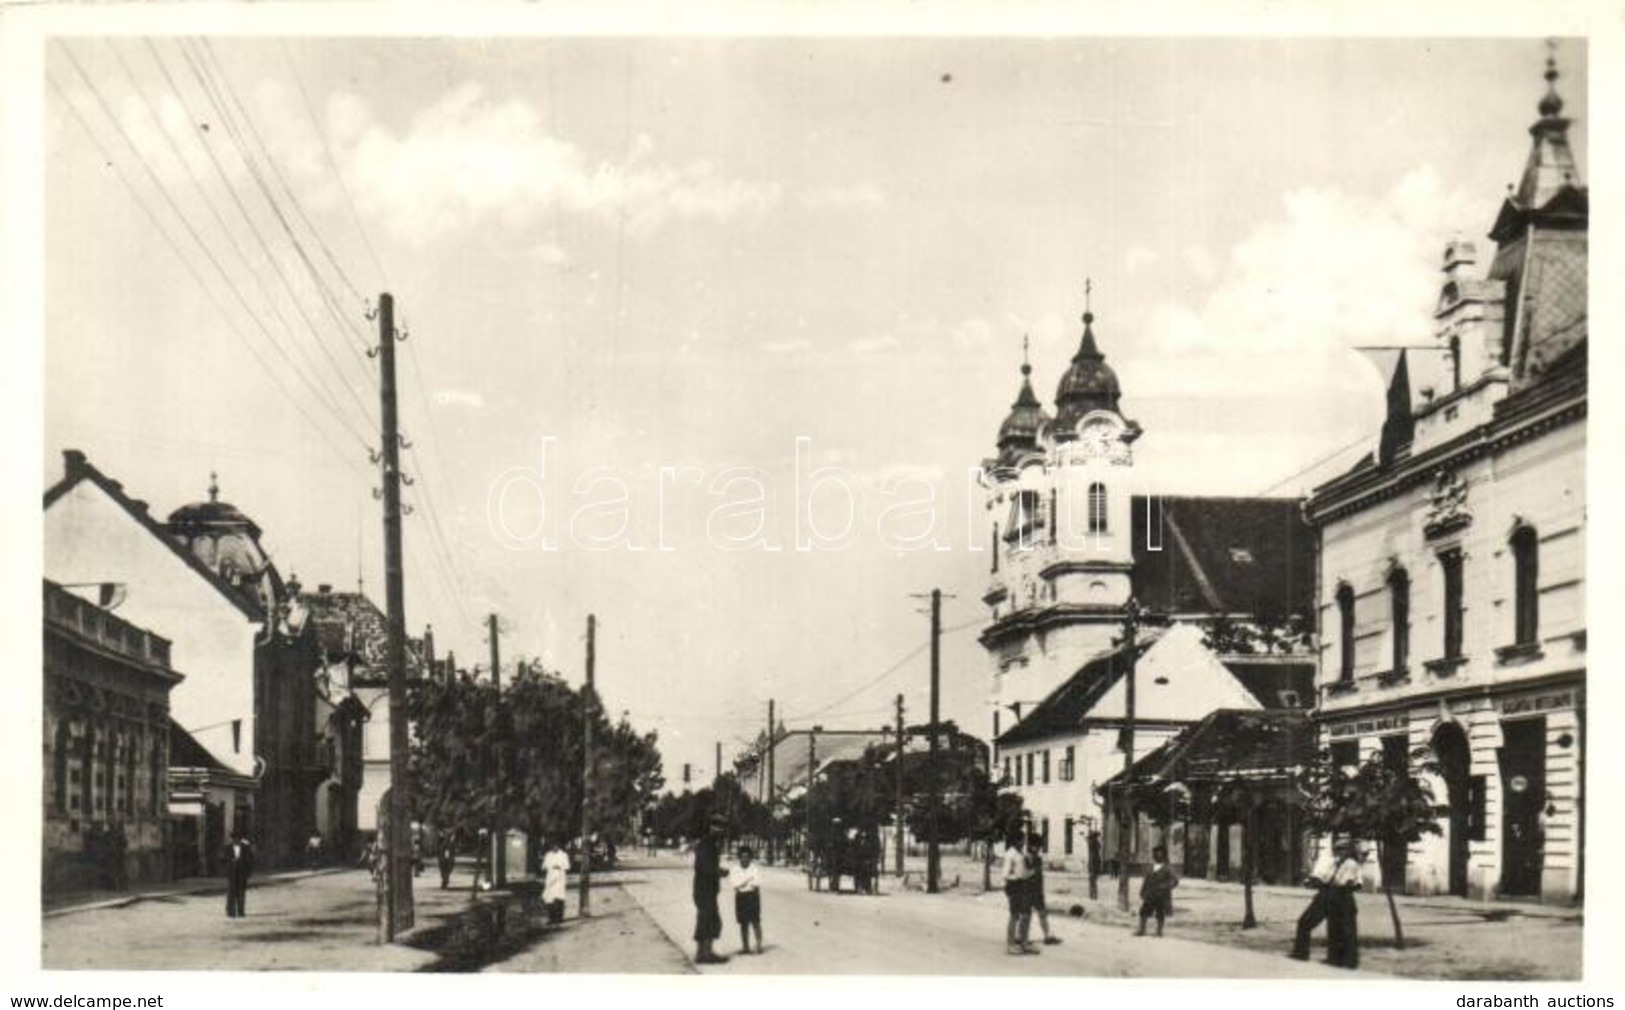 ** T1 Galánta, Fő Utca, Templom, Bank / Main Street With Bank And Church - Zonder Classificatie